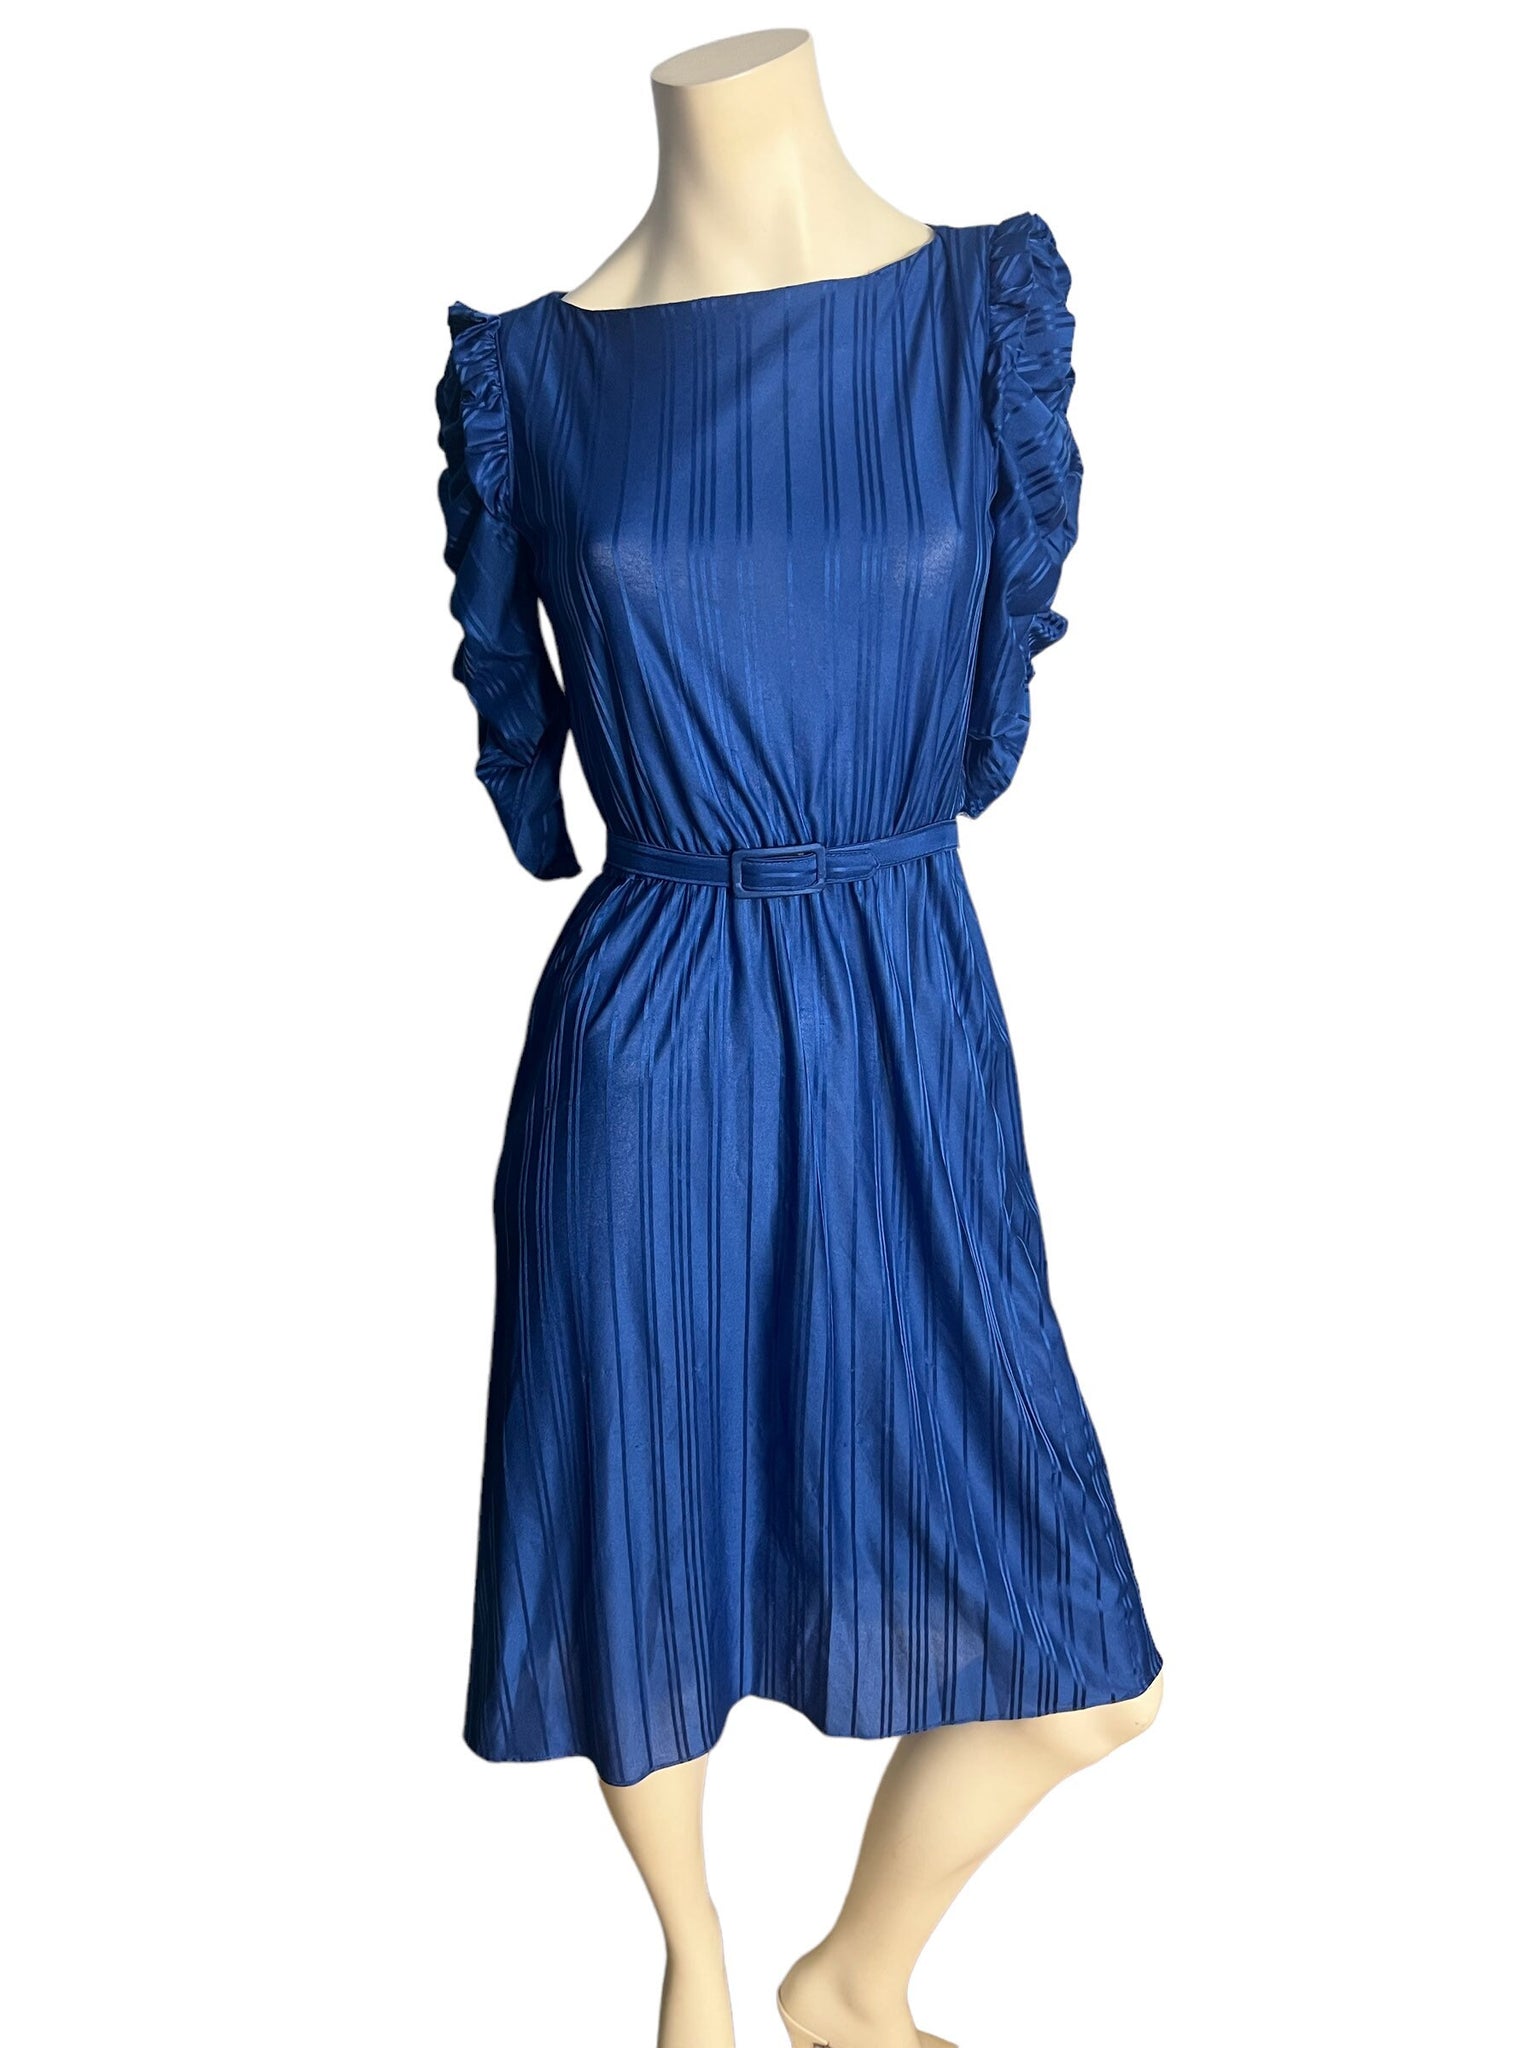 Vintage blue 80's dress semi sheer S M